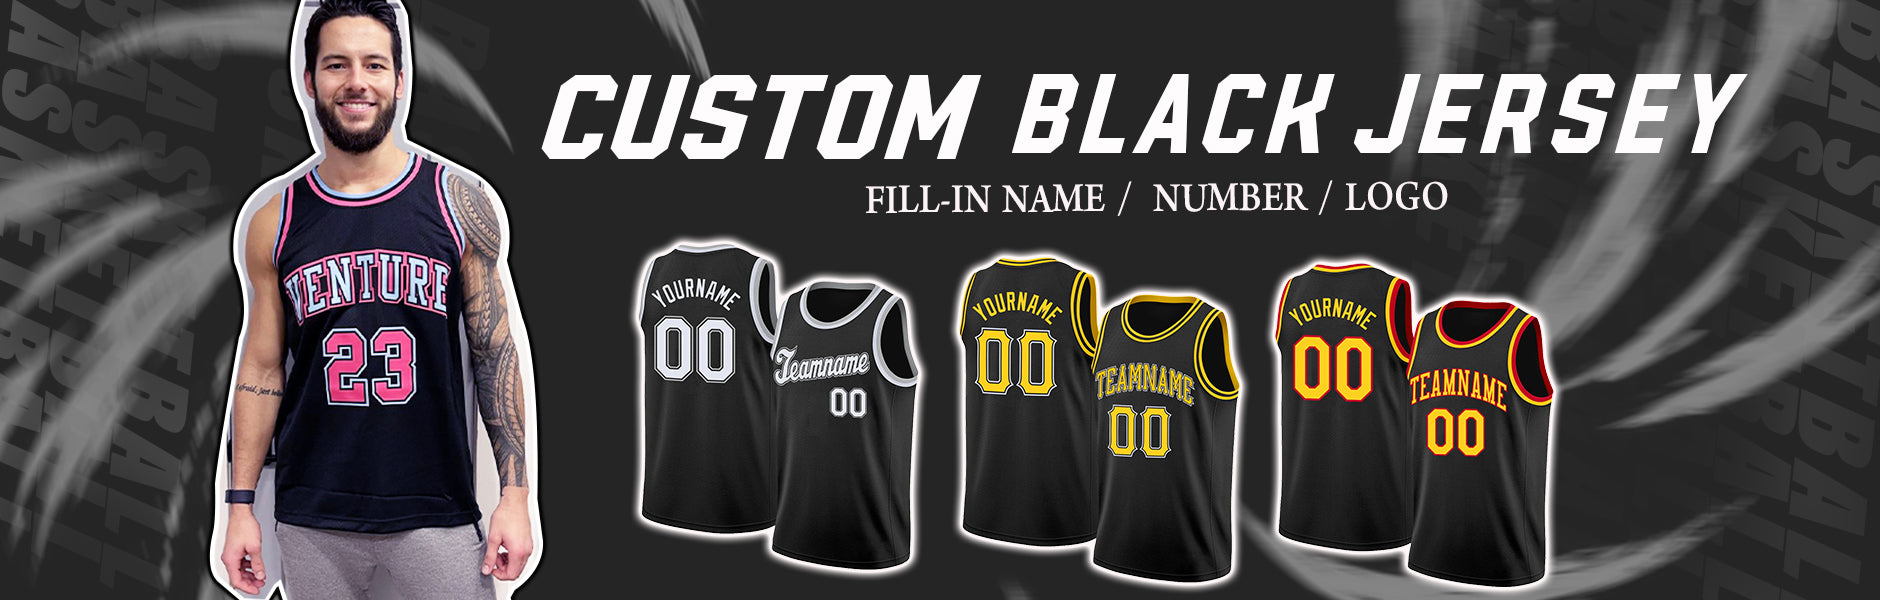 custom basketball black jersey